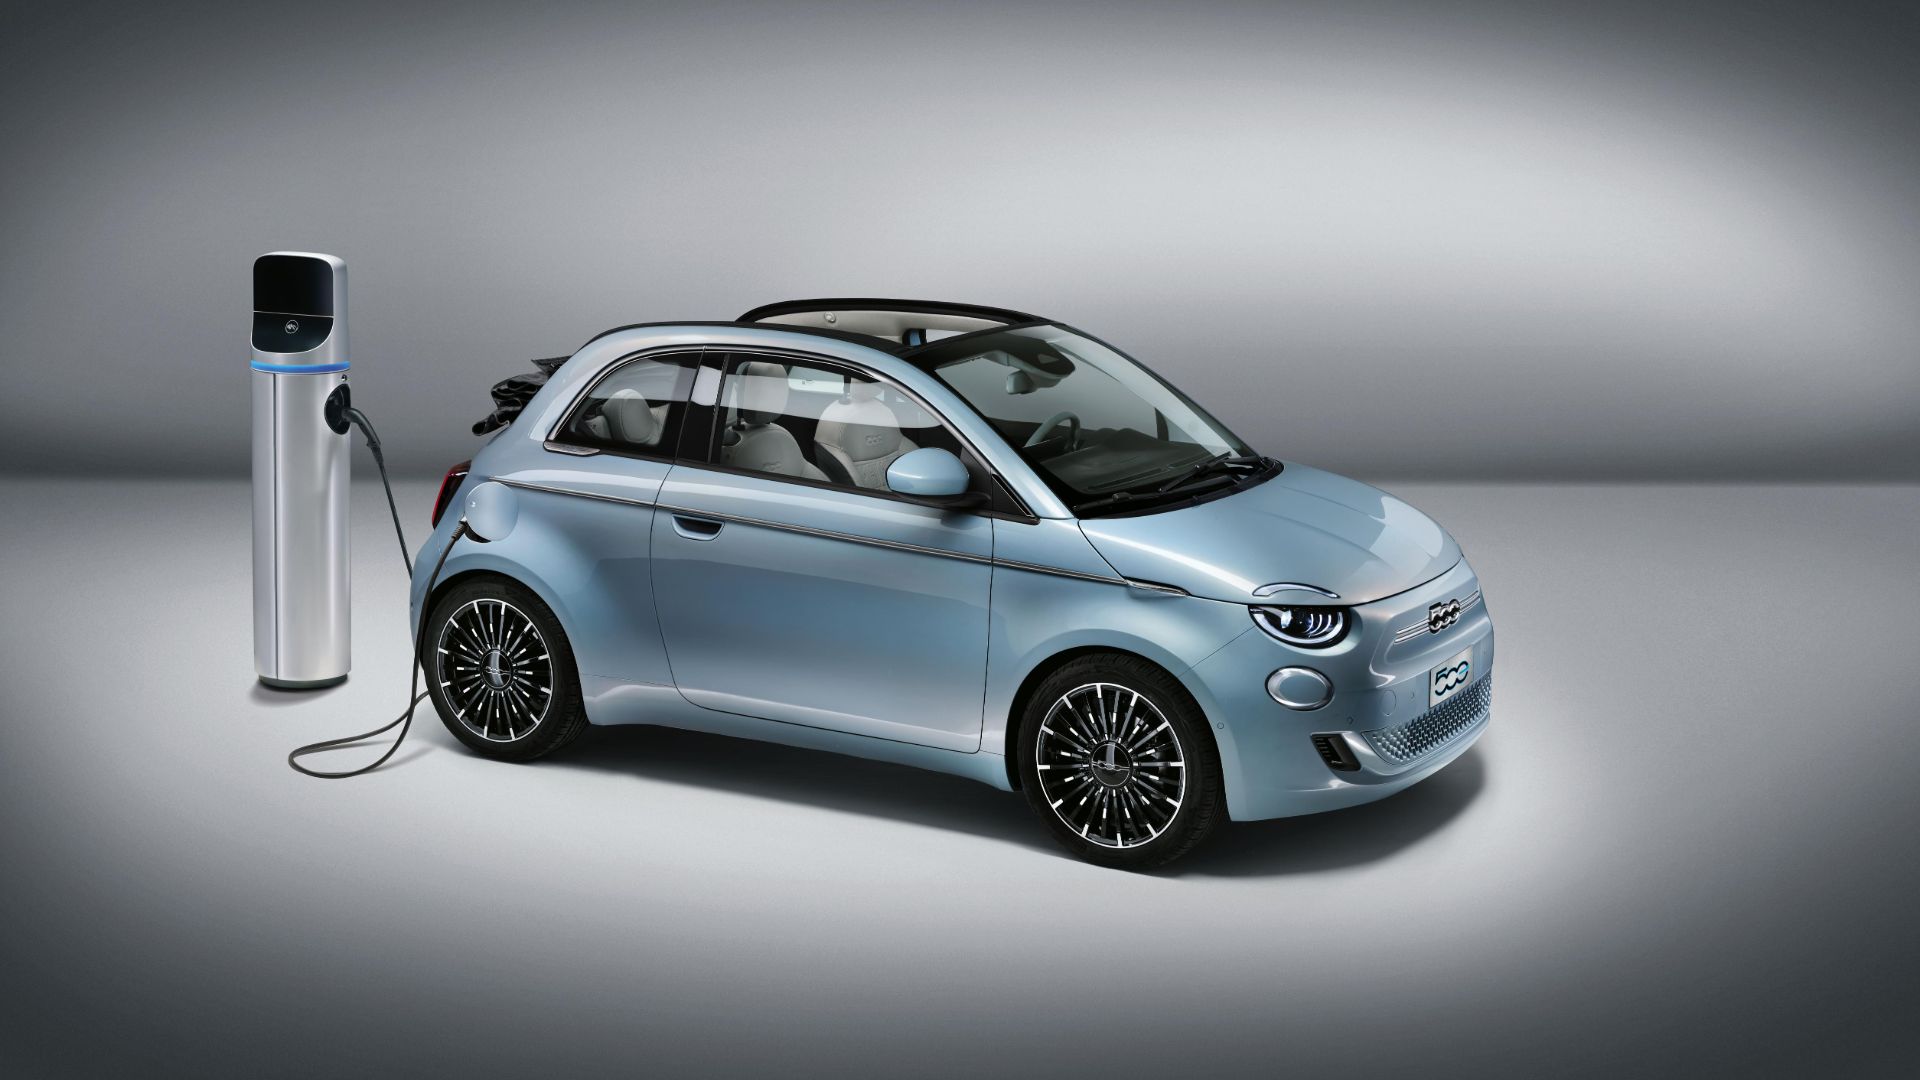 2020 Fiat 500 revealed